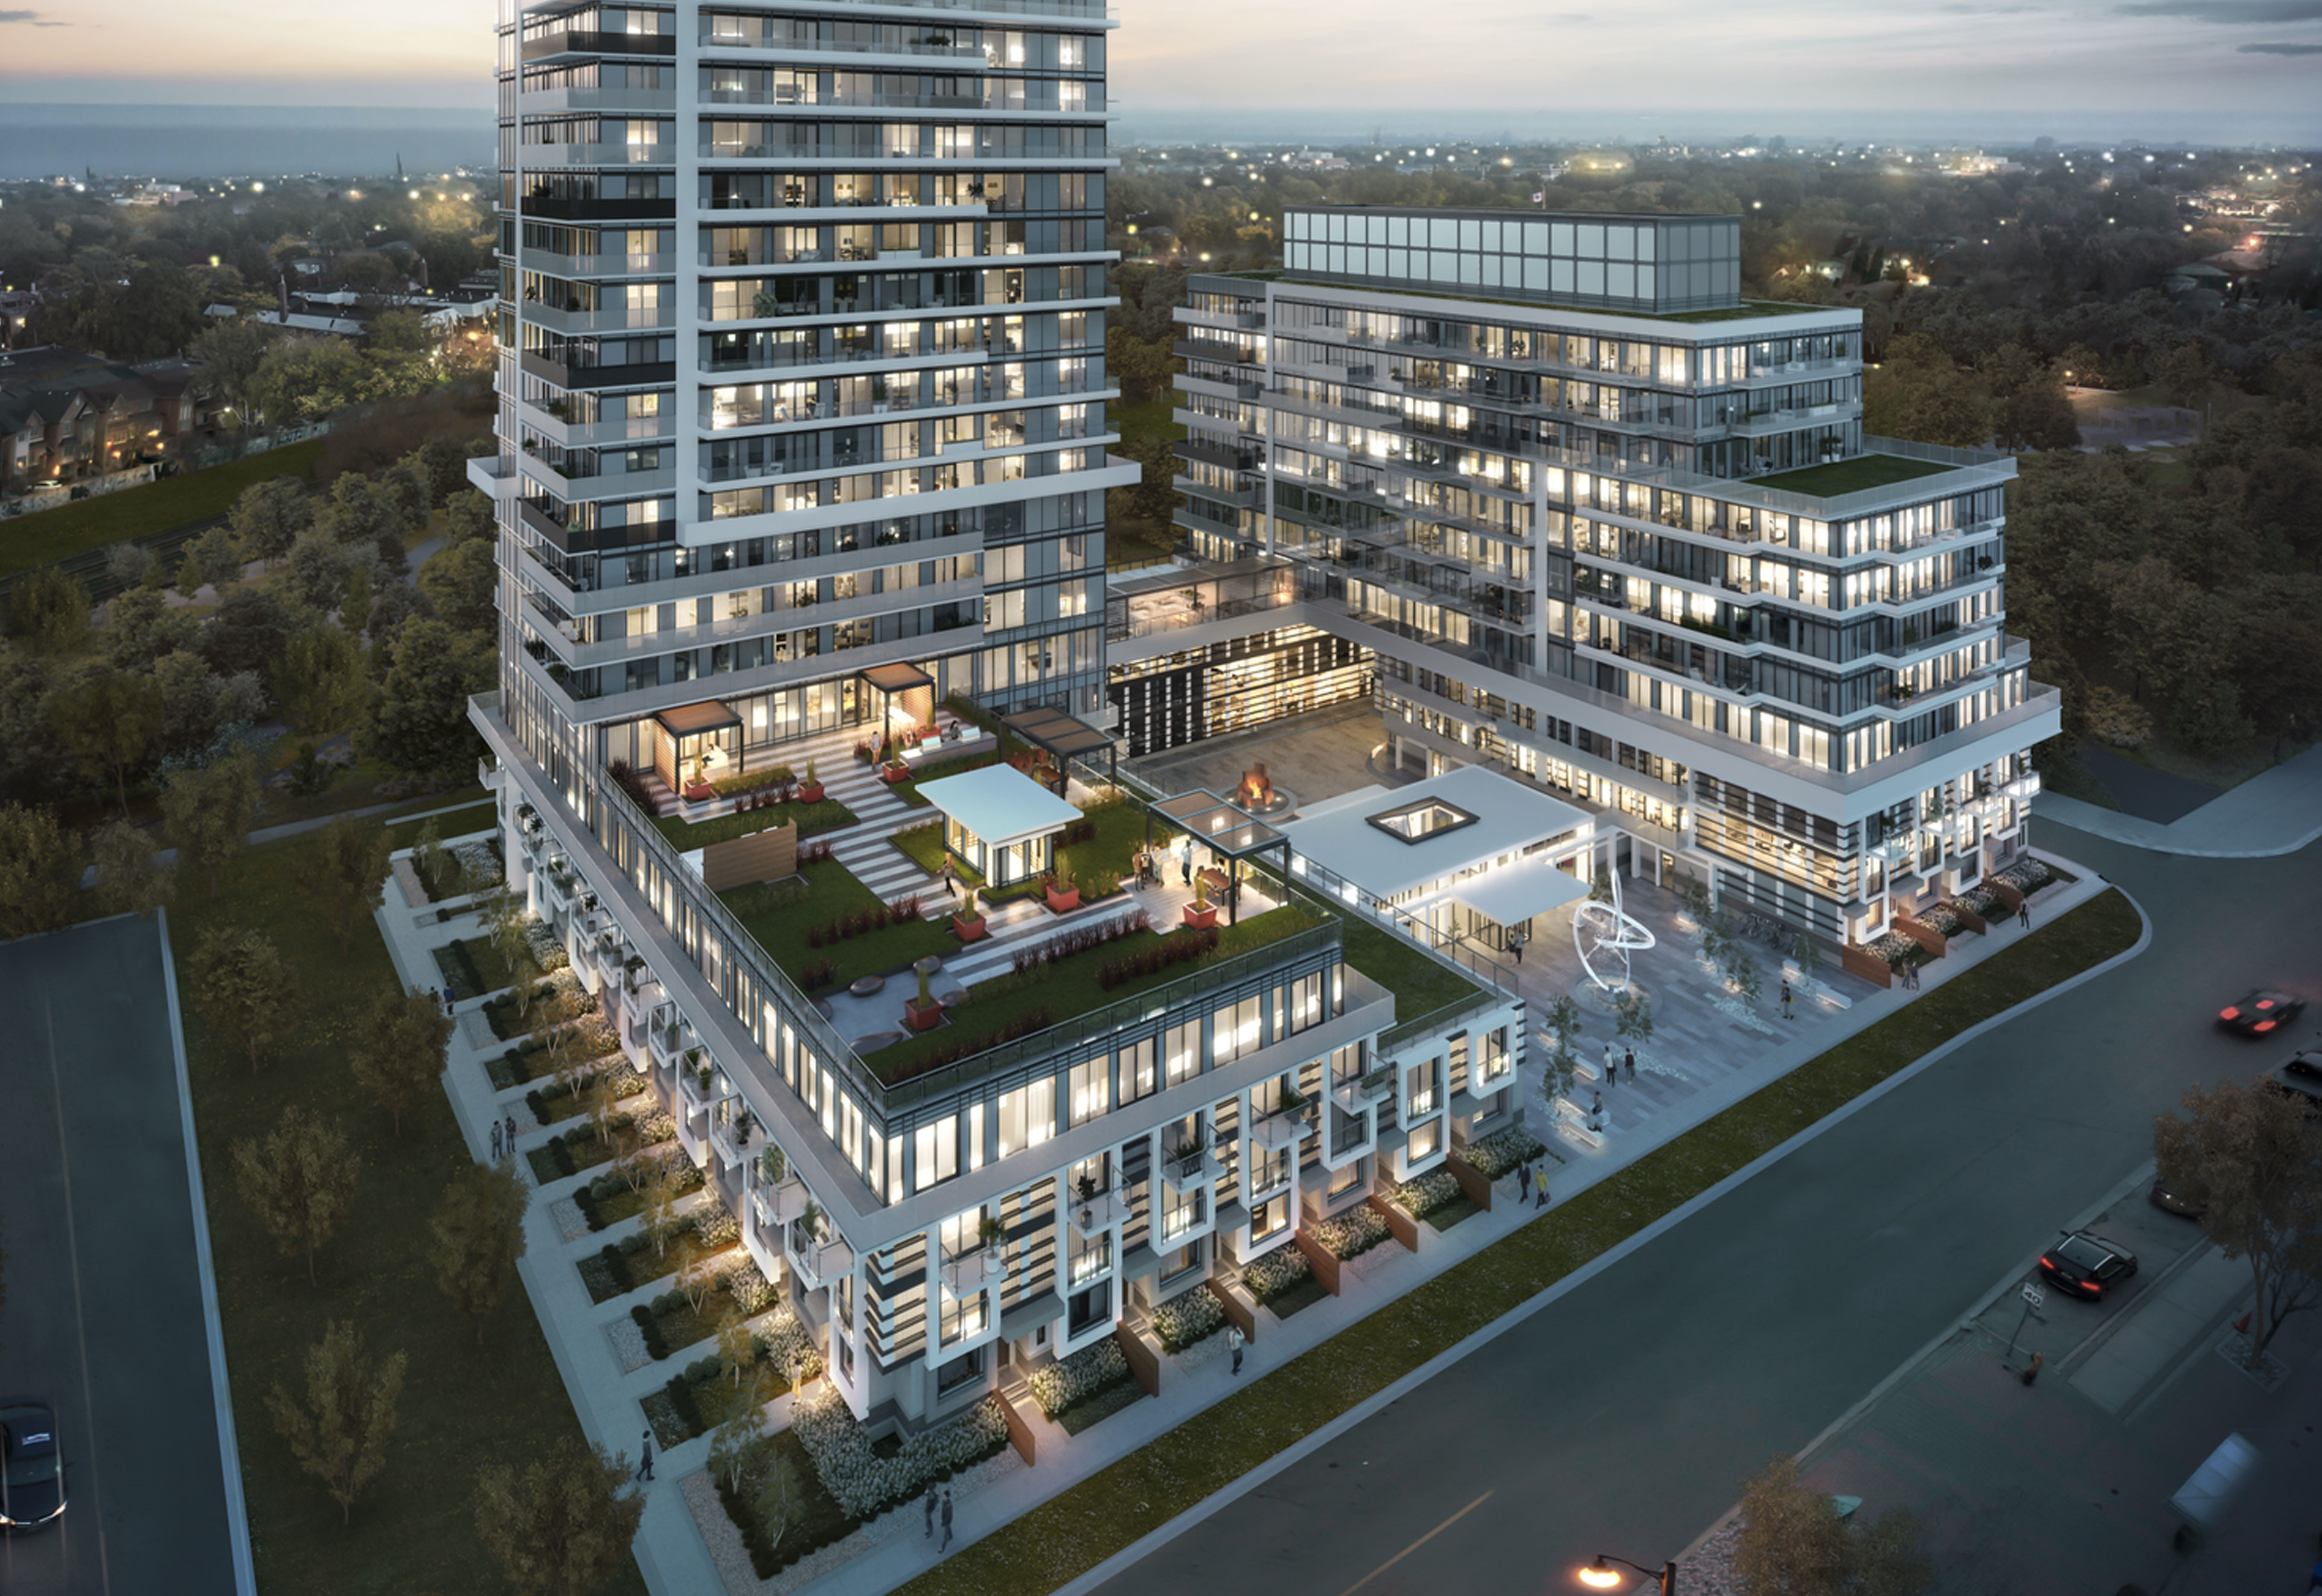 Empire Phoenix Condos is a new high rise condo complex by Empire Communities located in 251 Manitoba St, Toronto.